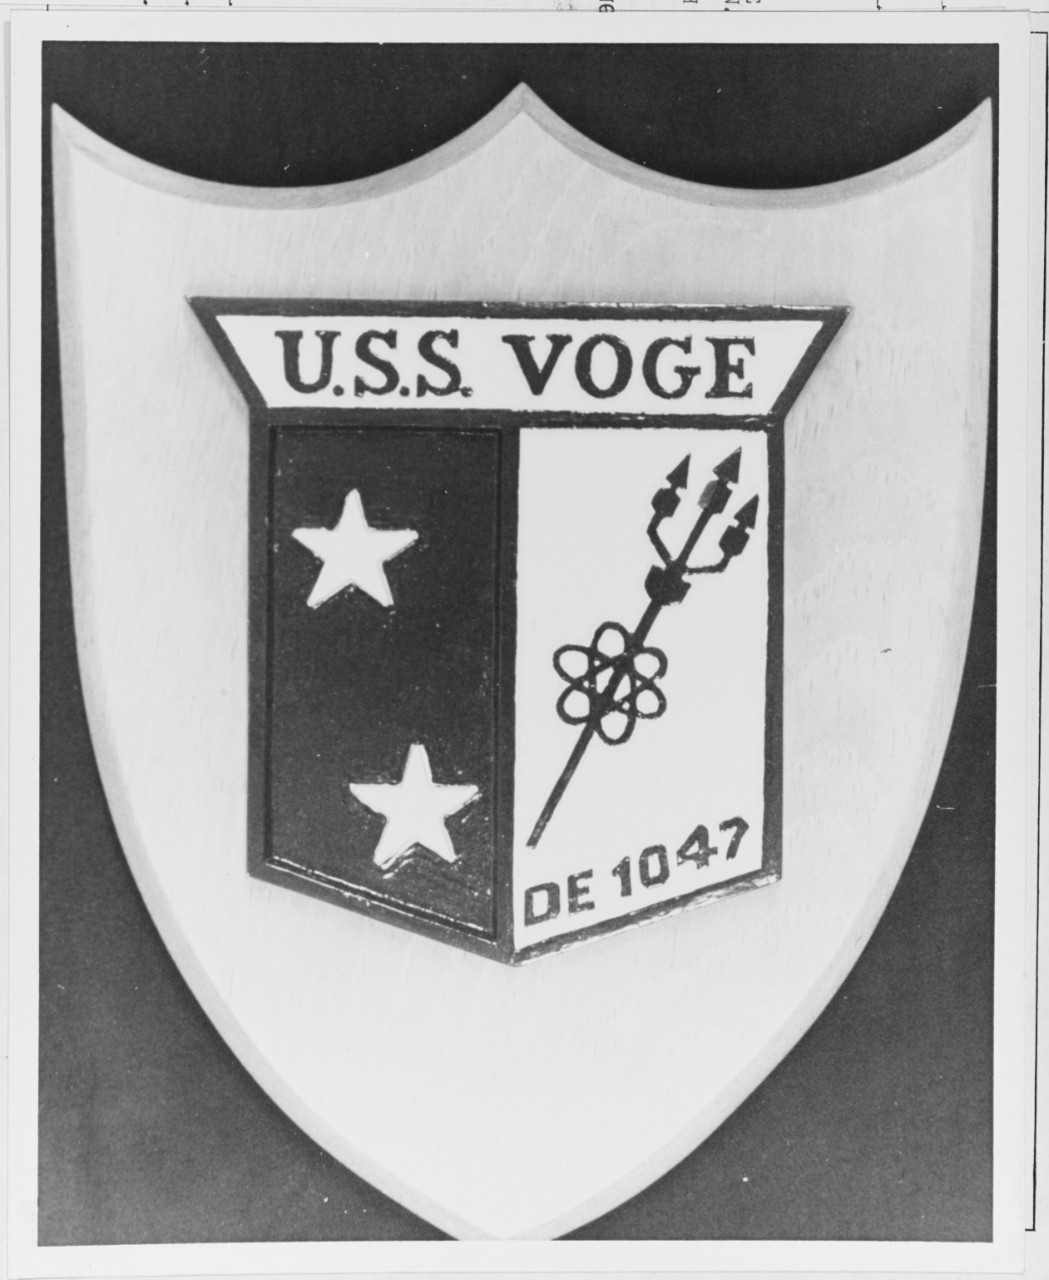 Insignia:  USS VOGE (DE-1047)